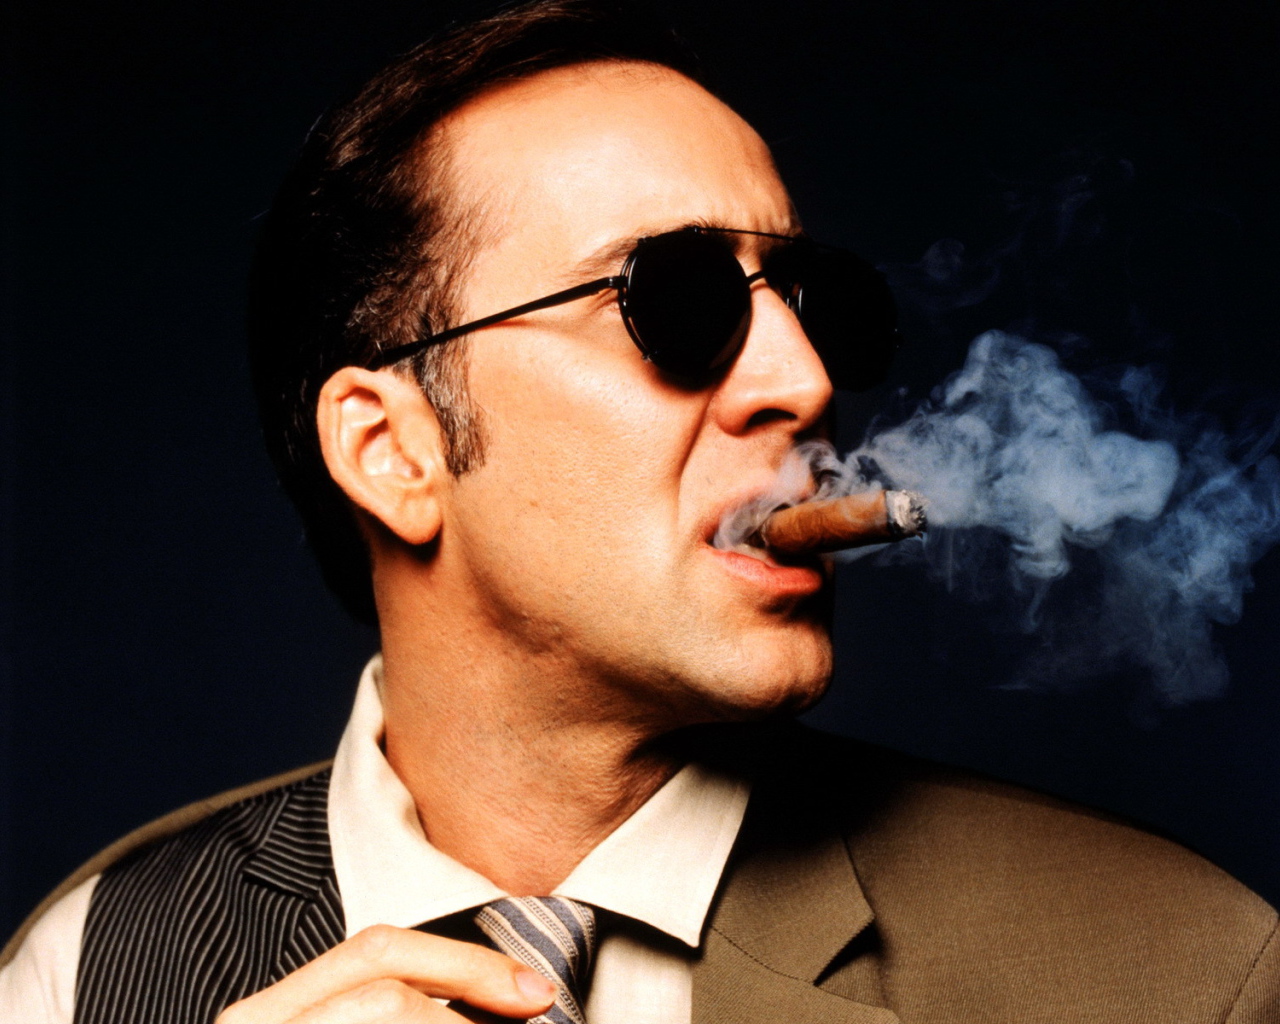 Nicolas Cage is smoking cigar